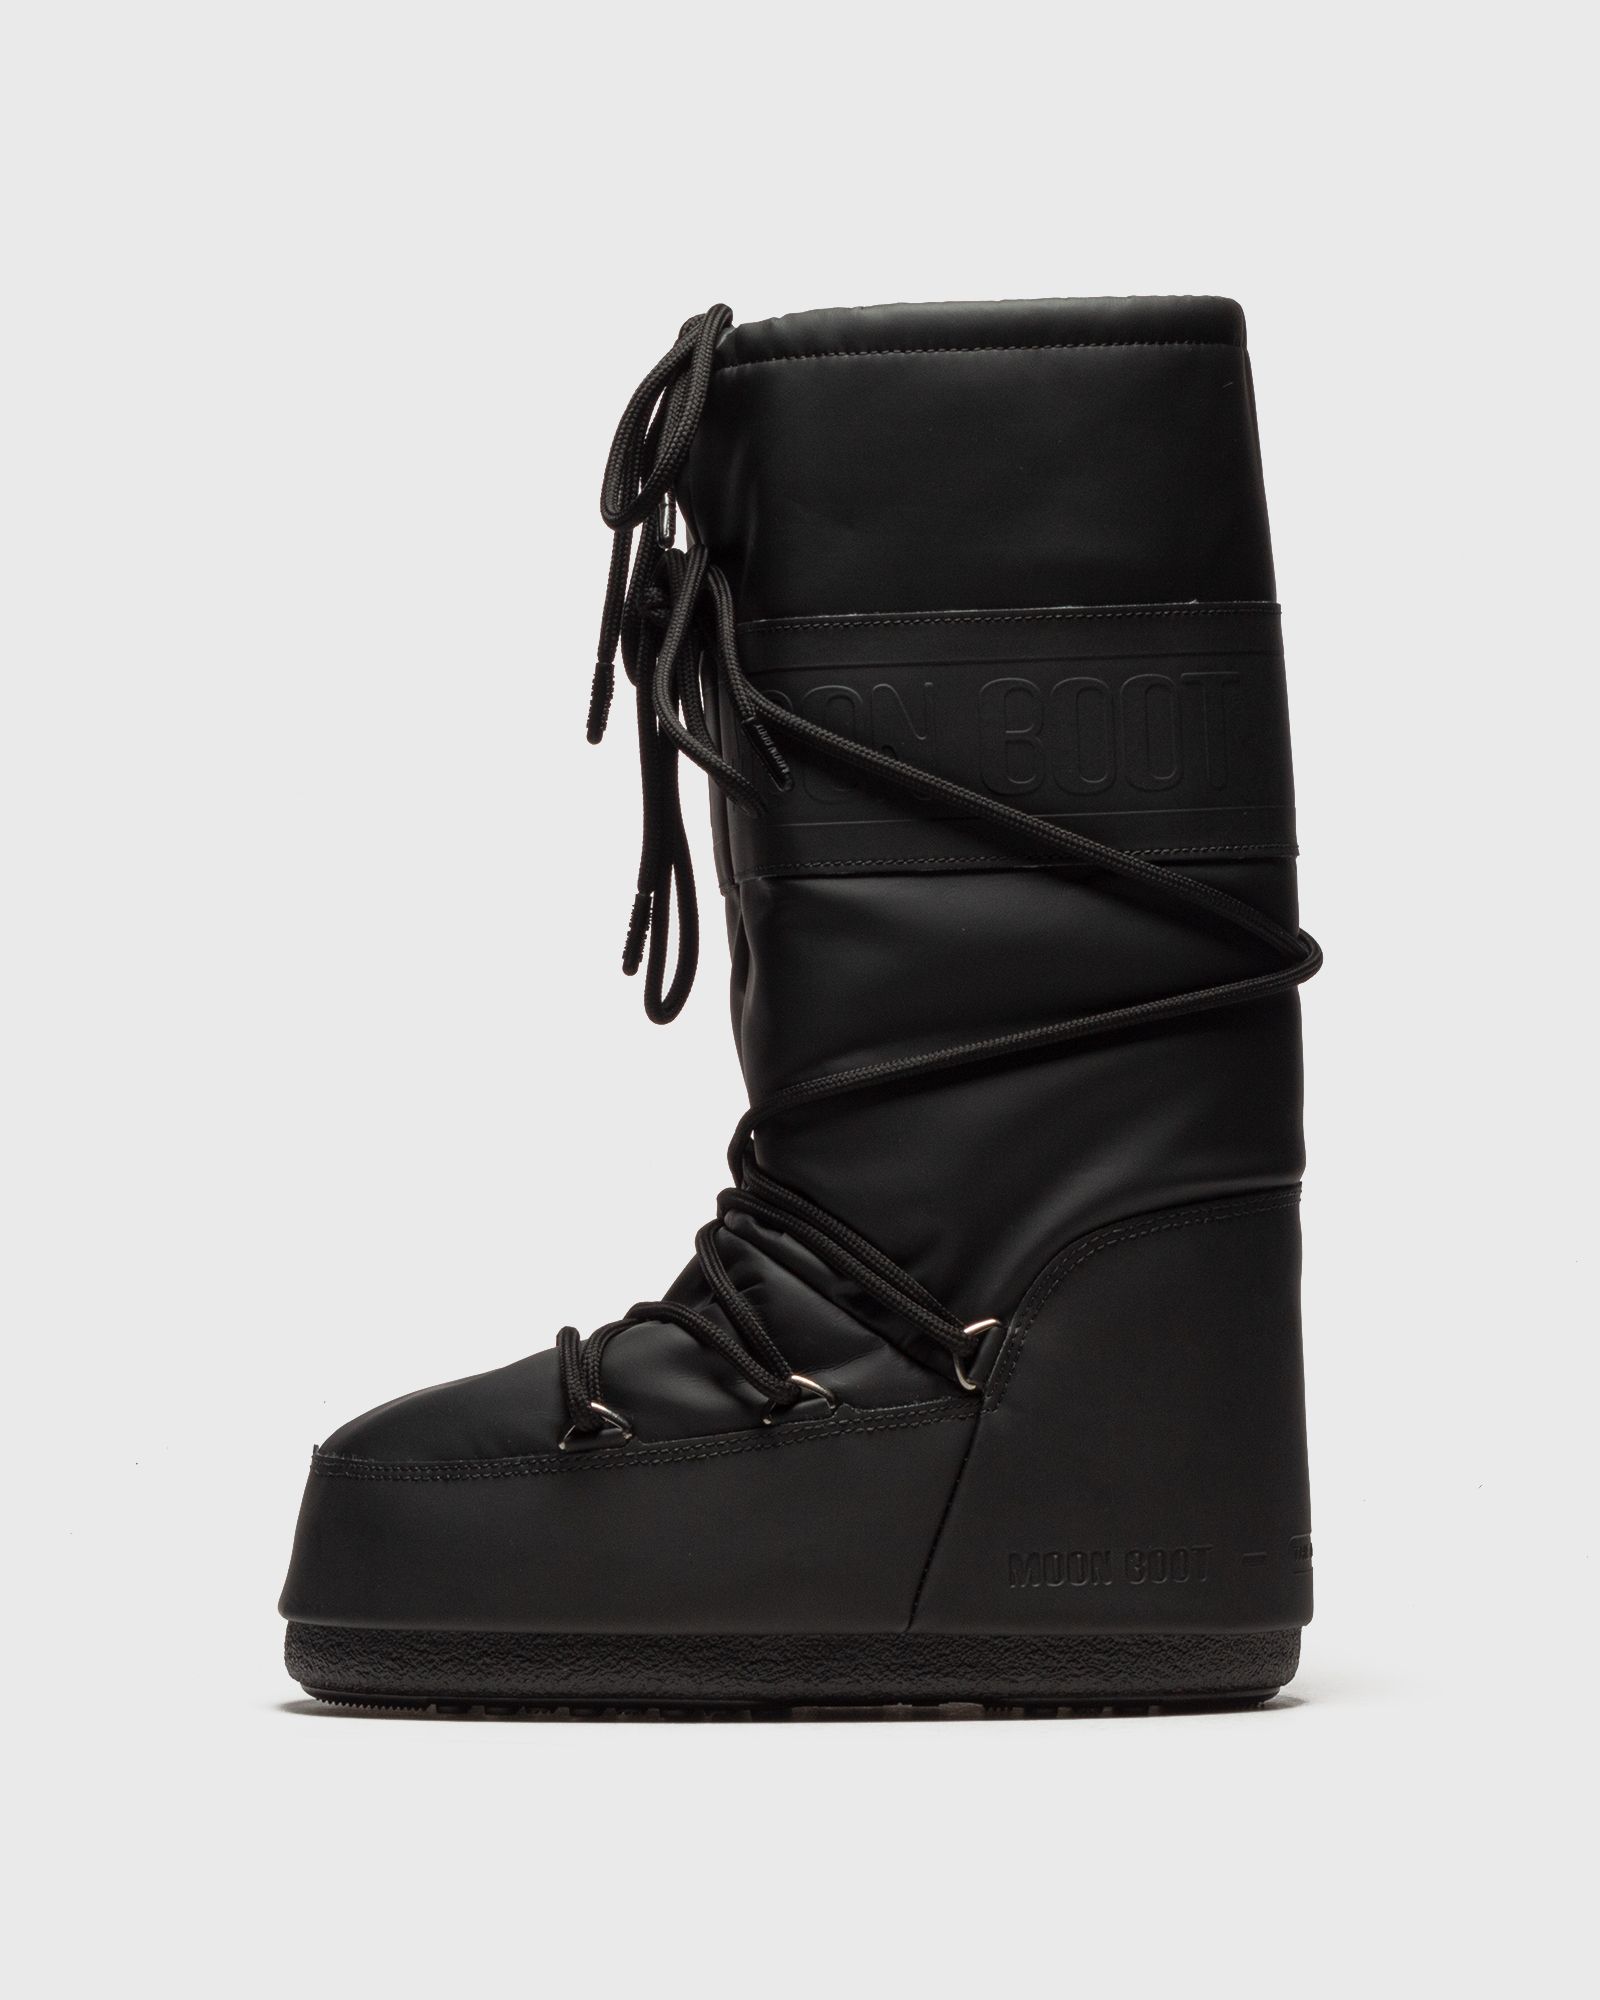 Moon Boot - icon rubber women boots black in größe:42-44